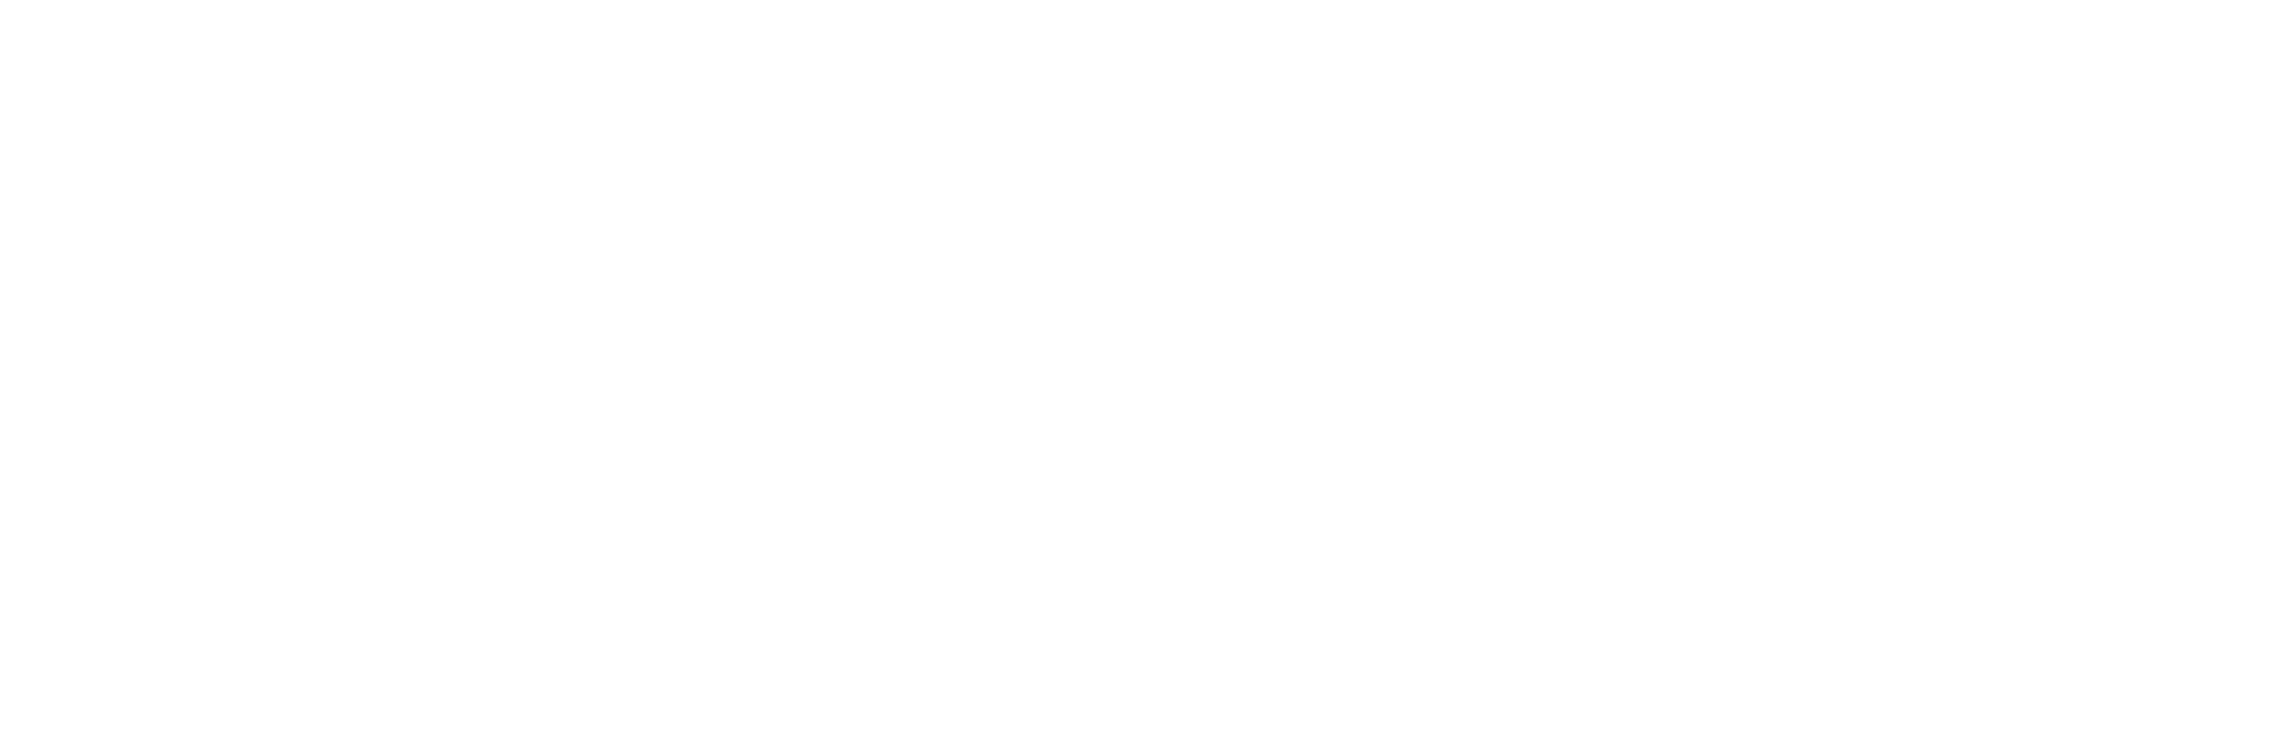 Rebecca Creek Distillery Logo White Horizontal